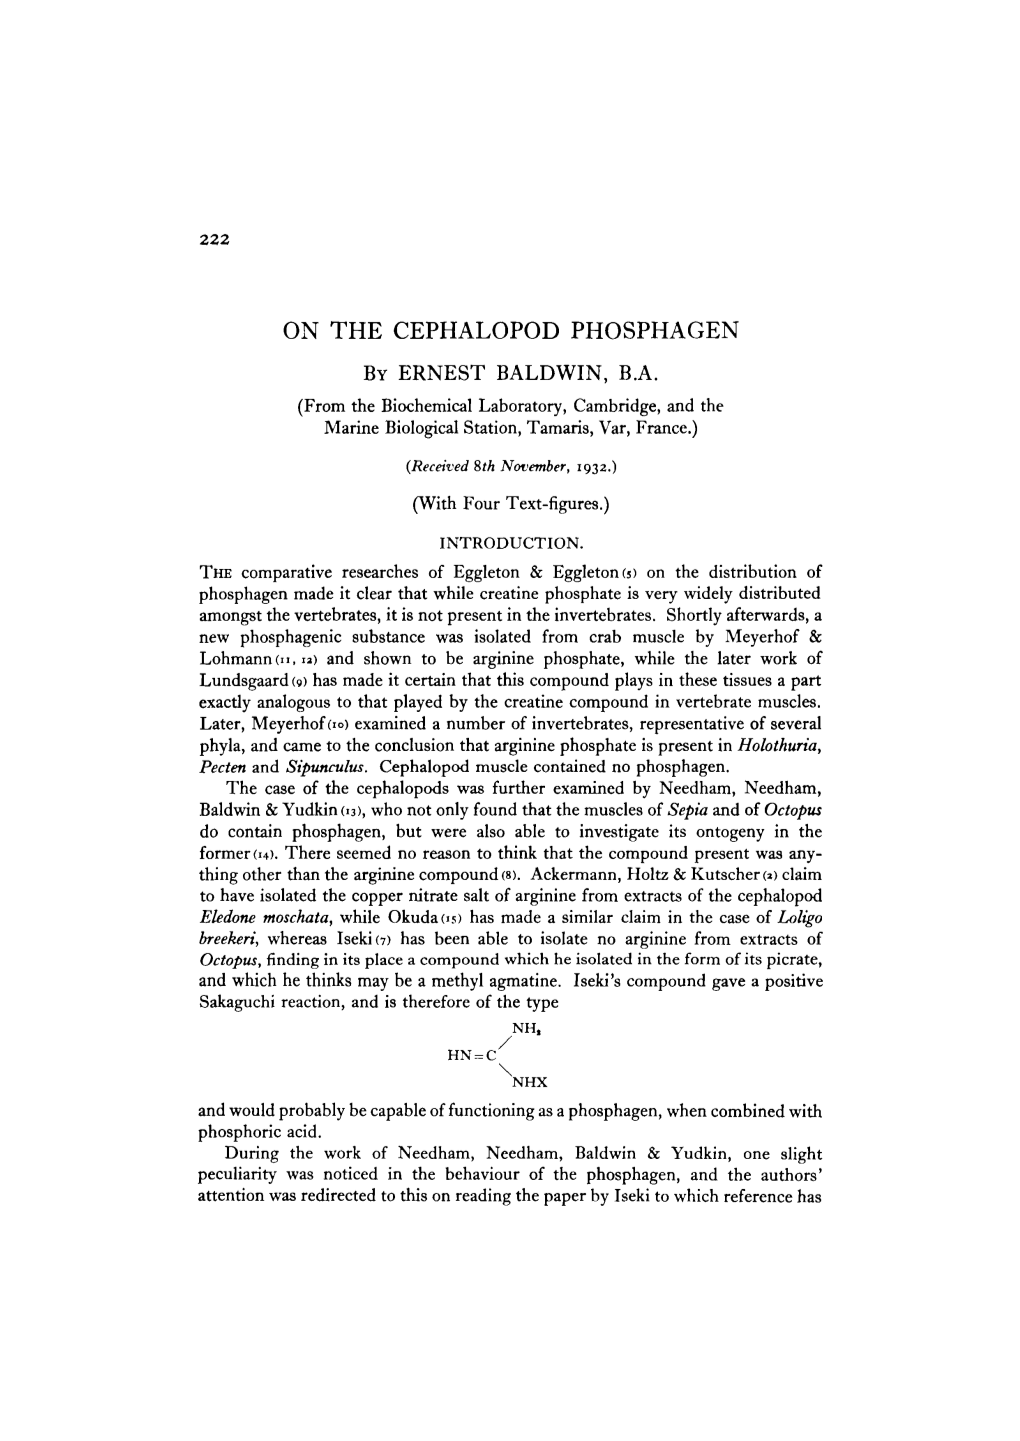 On the Cephalopod Phosphagen by Ernest Baldwin, B.A